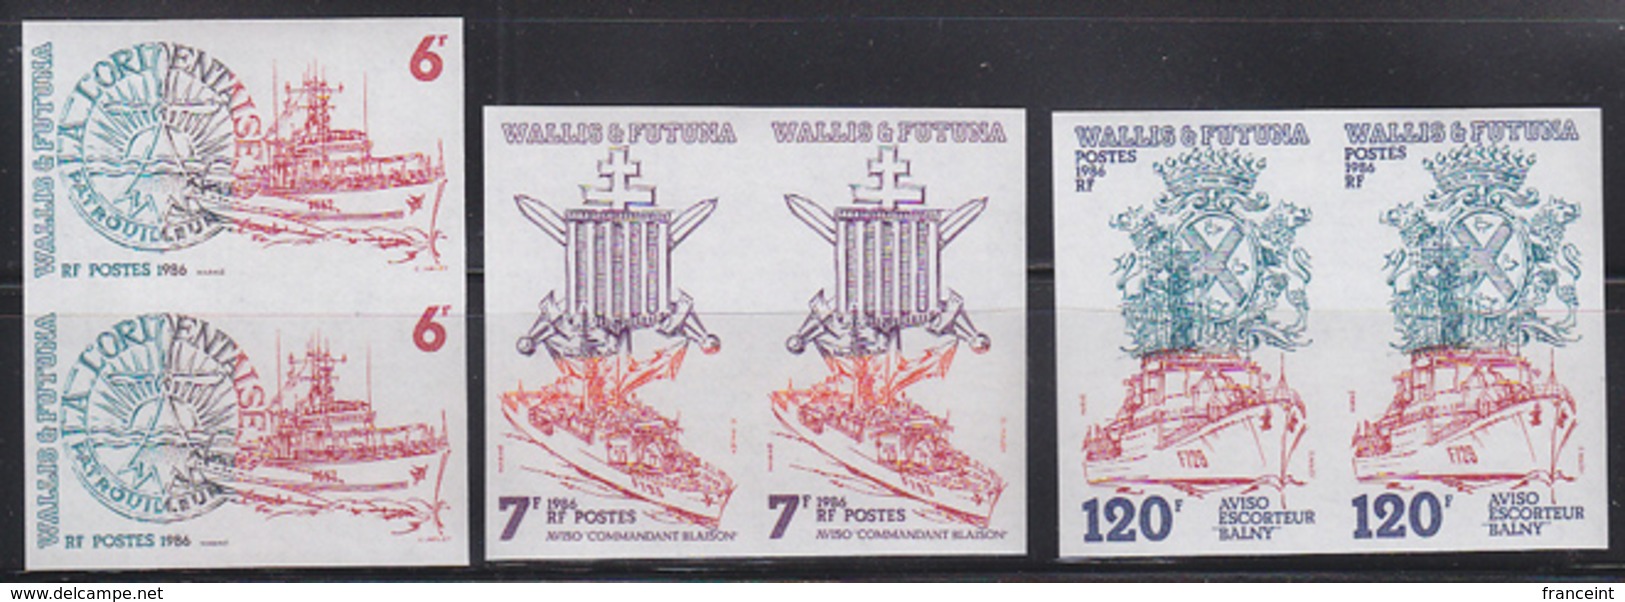 WALLIS & FUTUNA (1986) Ships. Set Of 3 Imperforate Pairs. Scott Nos 343-2, Yvert Nos 348-50. - Imperforates, Proofs & Errors